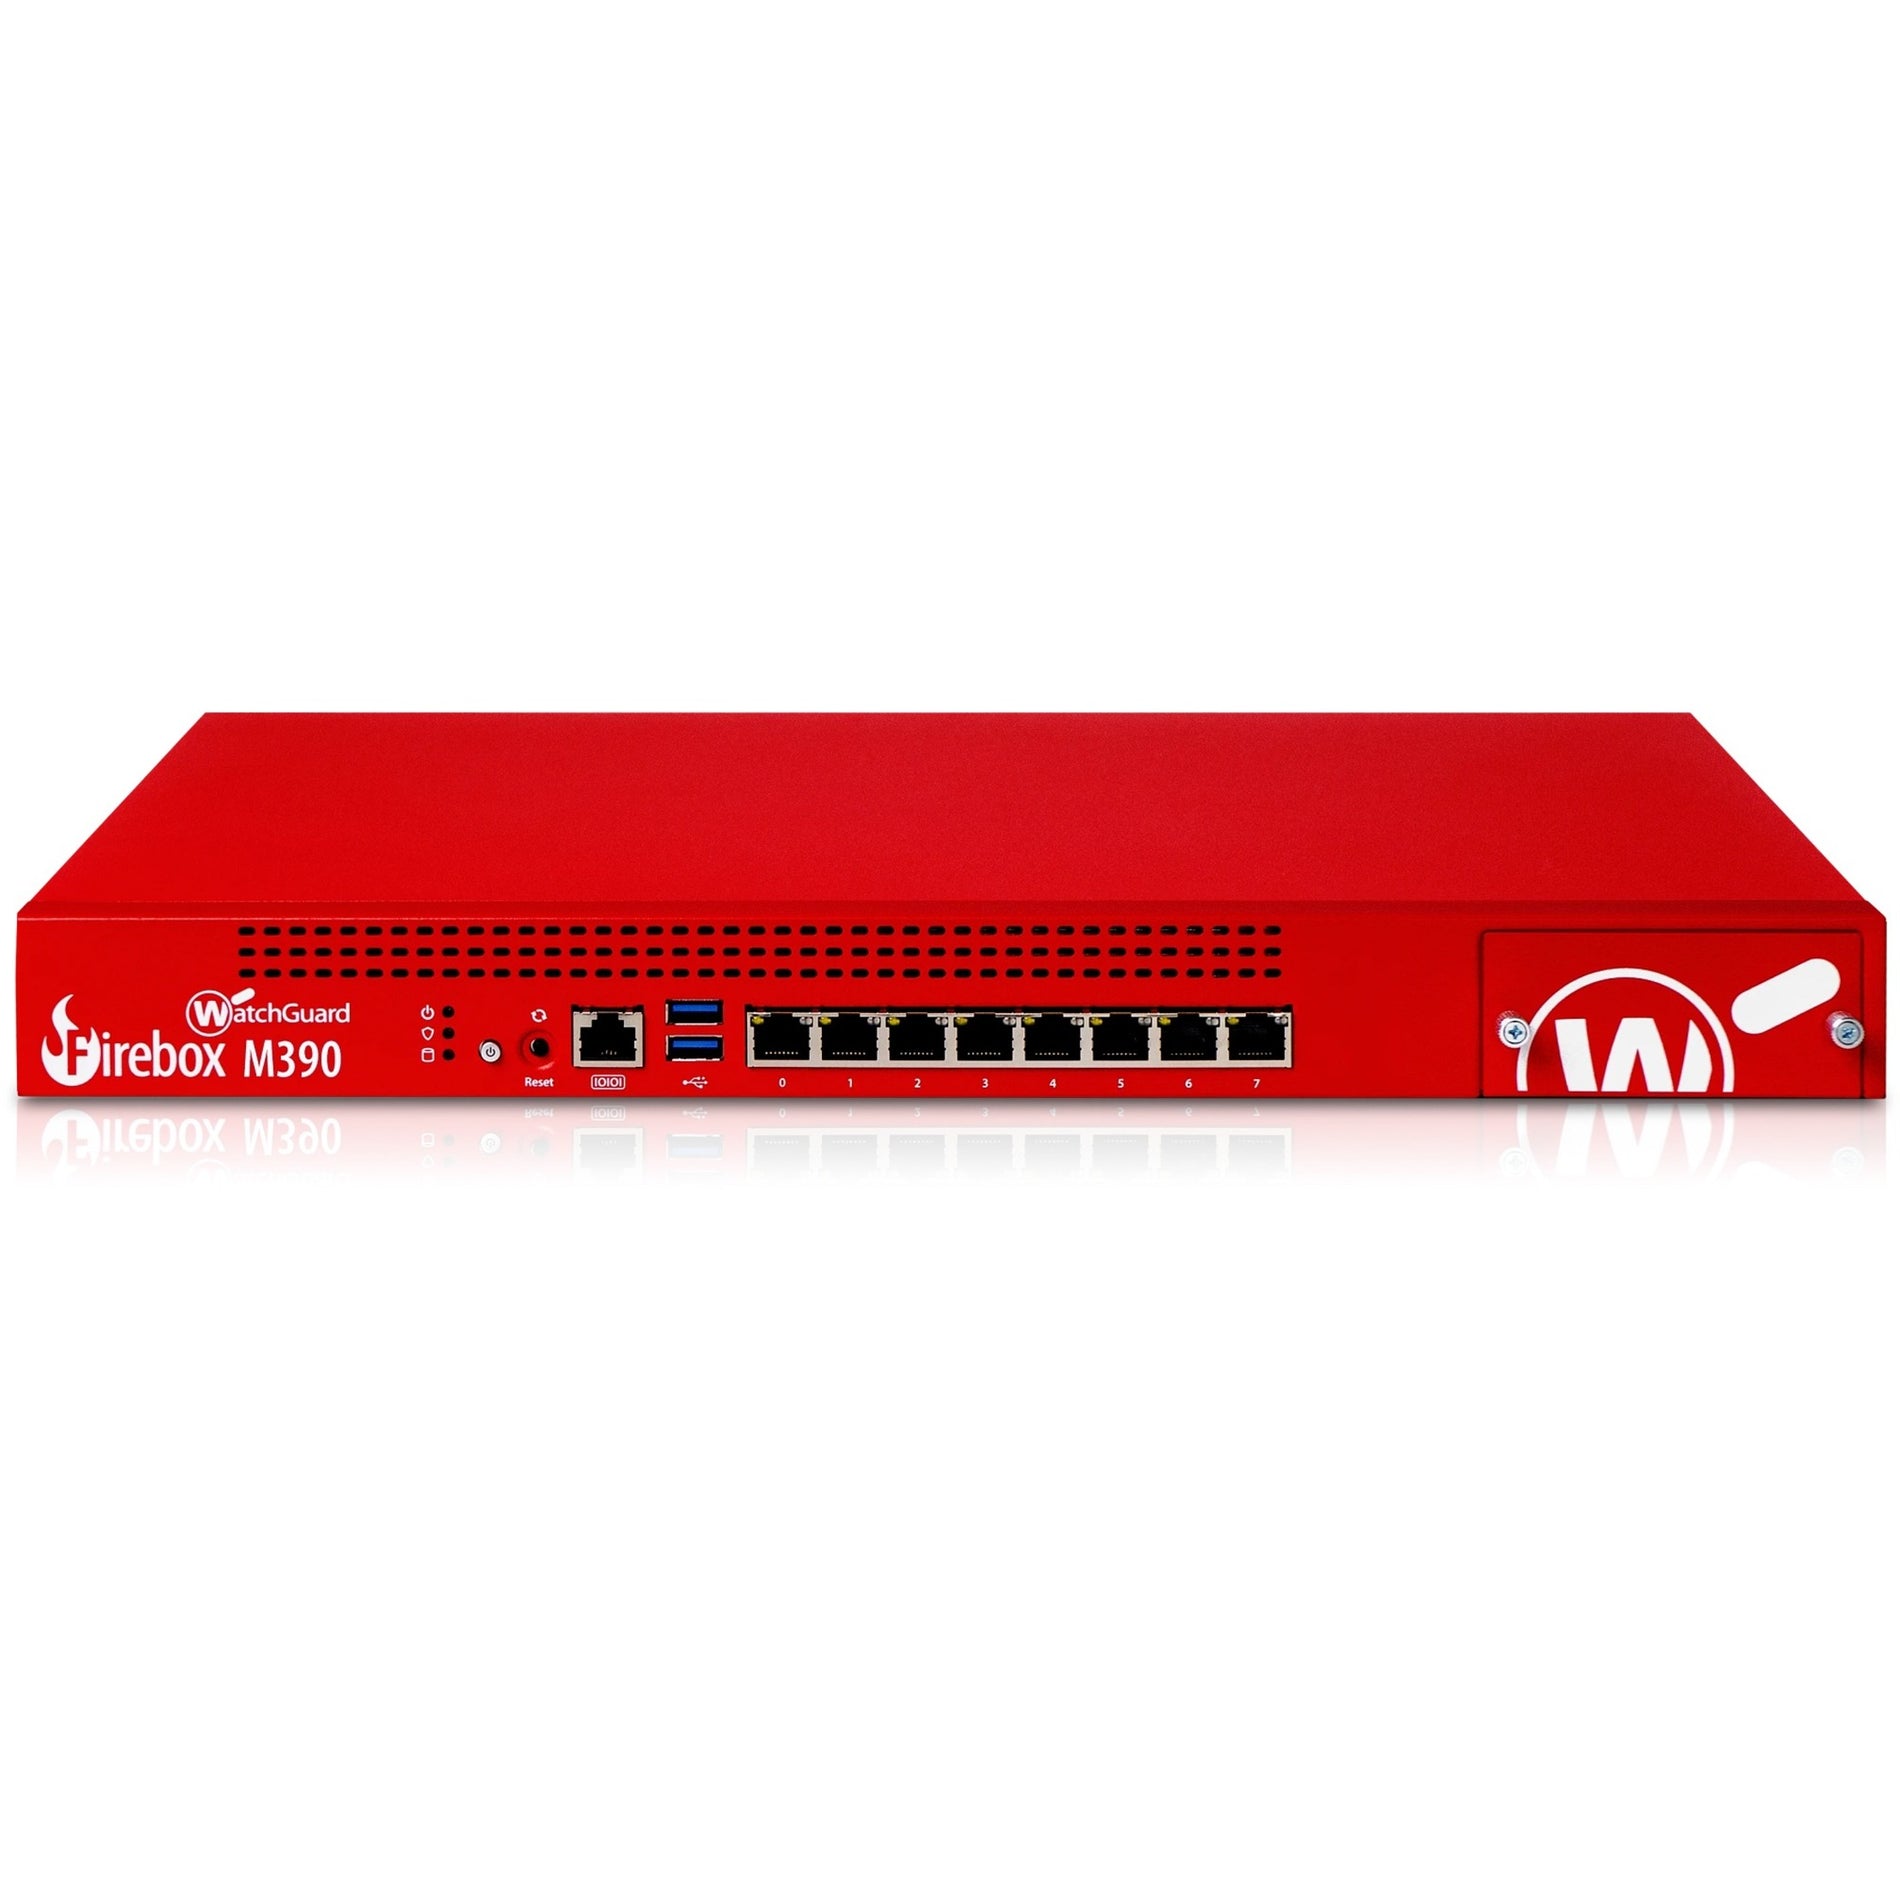 WatchGuard WGM39001603 Firebox M390 High Availability Firewall, 8 Ports, Gigabit Ethernet, Malware Protection